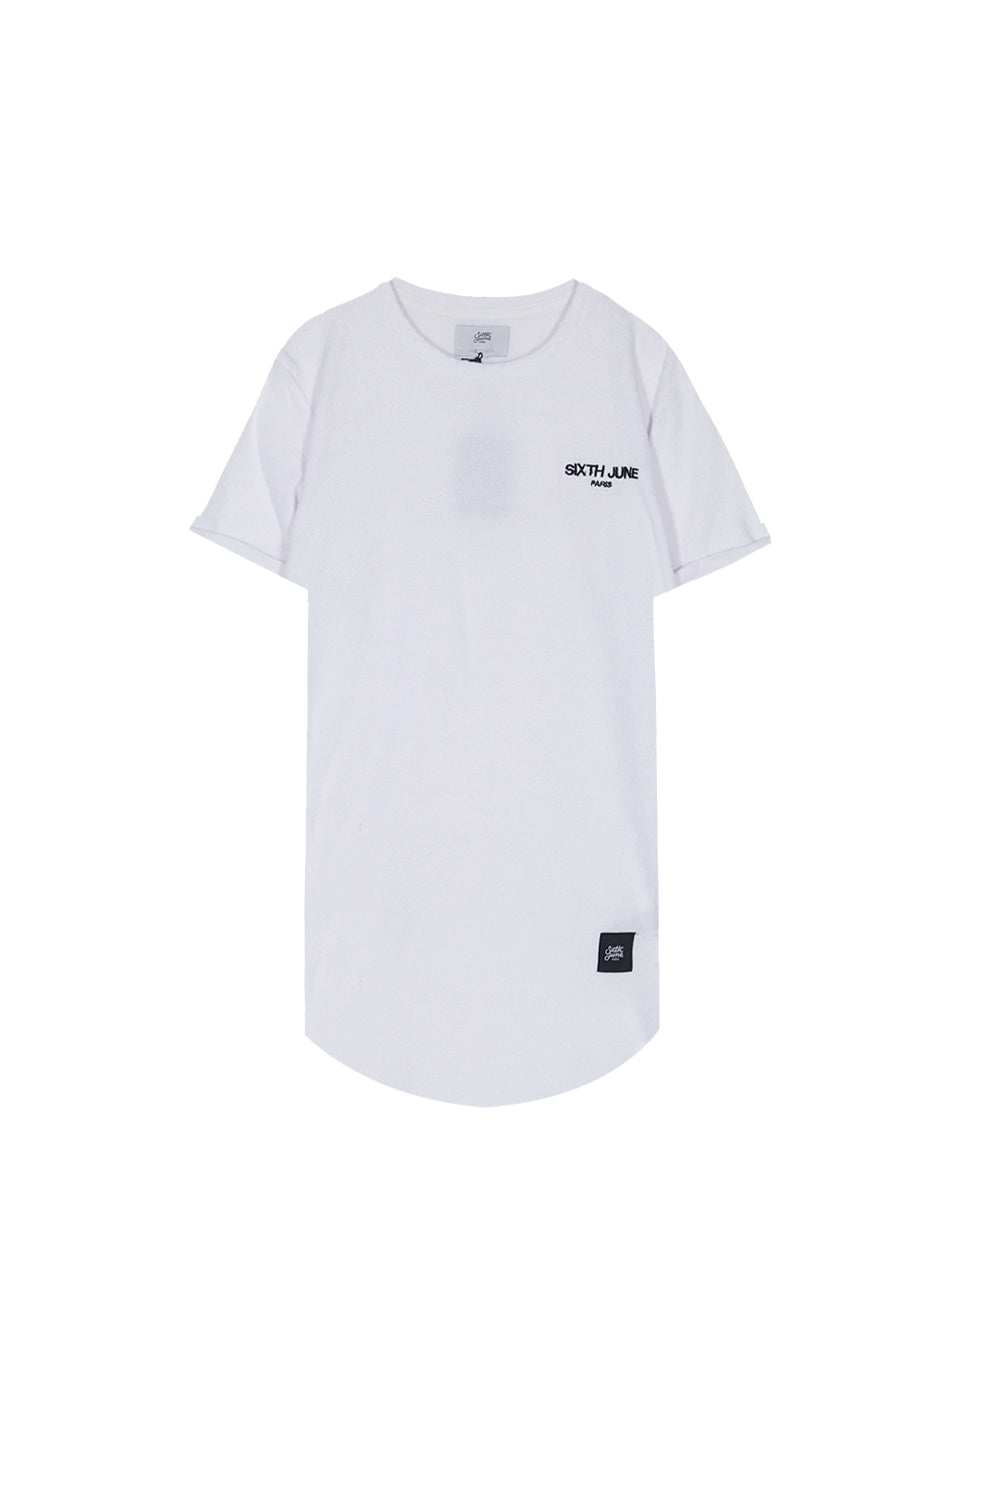 Sixth June - T-shirt towel logo blanc